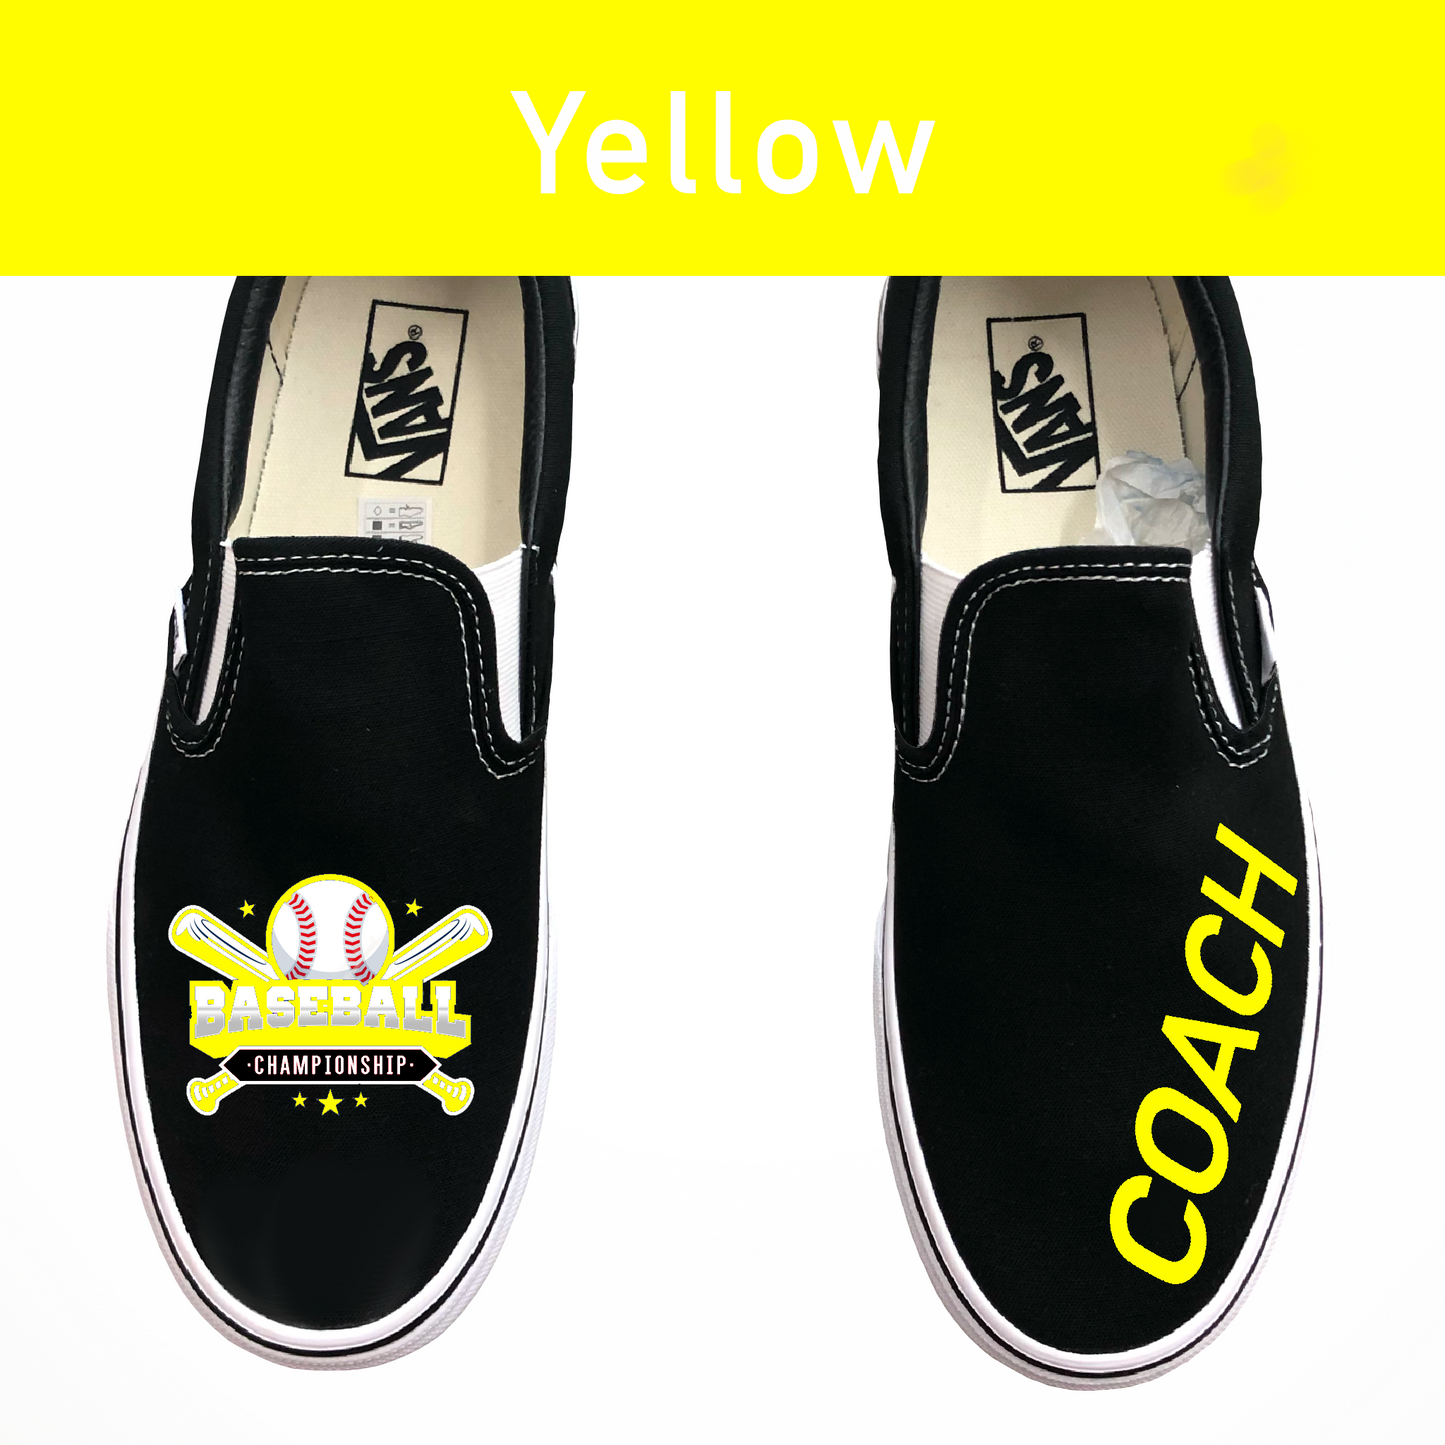 Baseball Custom Shoes Coaches Gift - Multiple Colors Available - Custom Vans Shoes